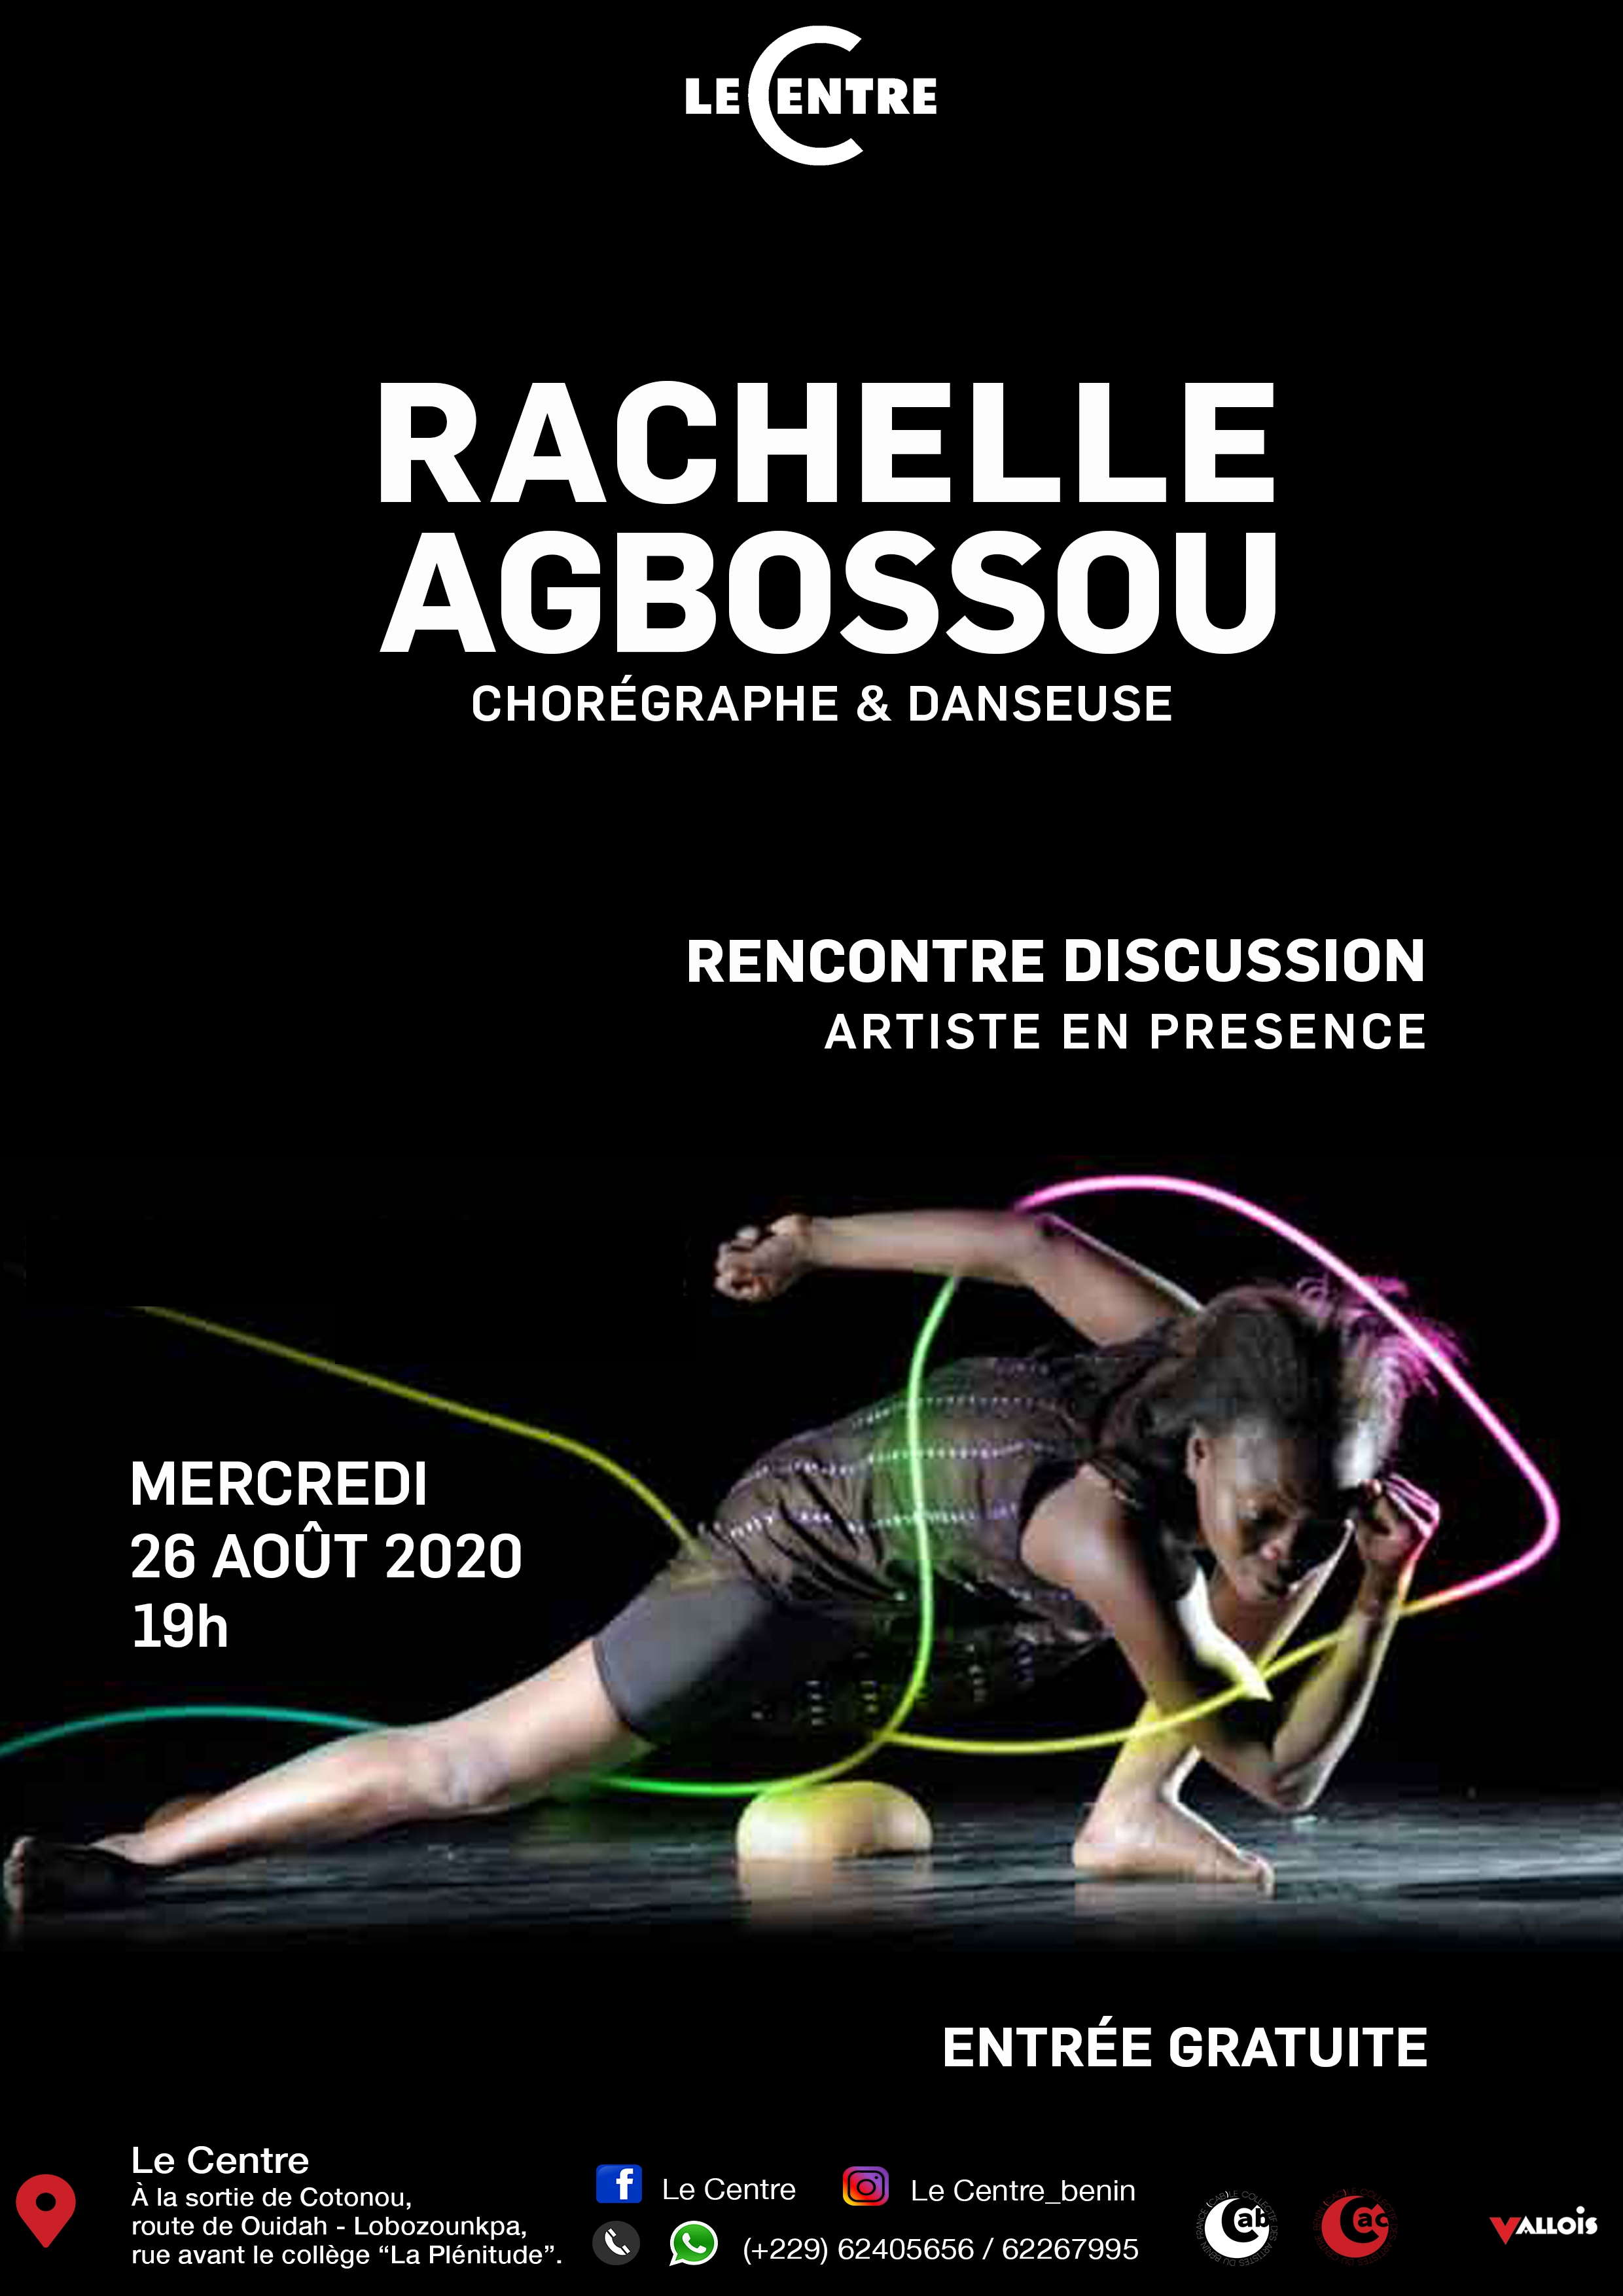 Rachelle Agbossou